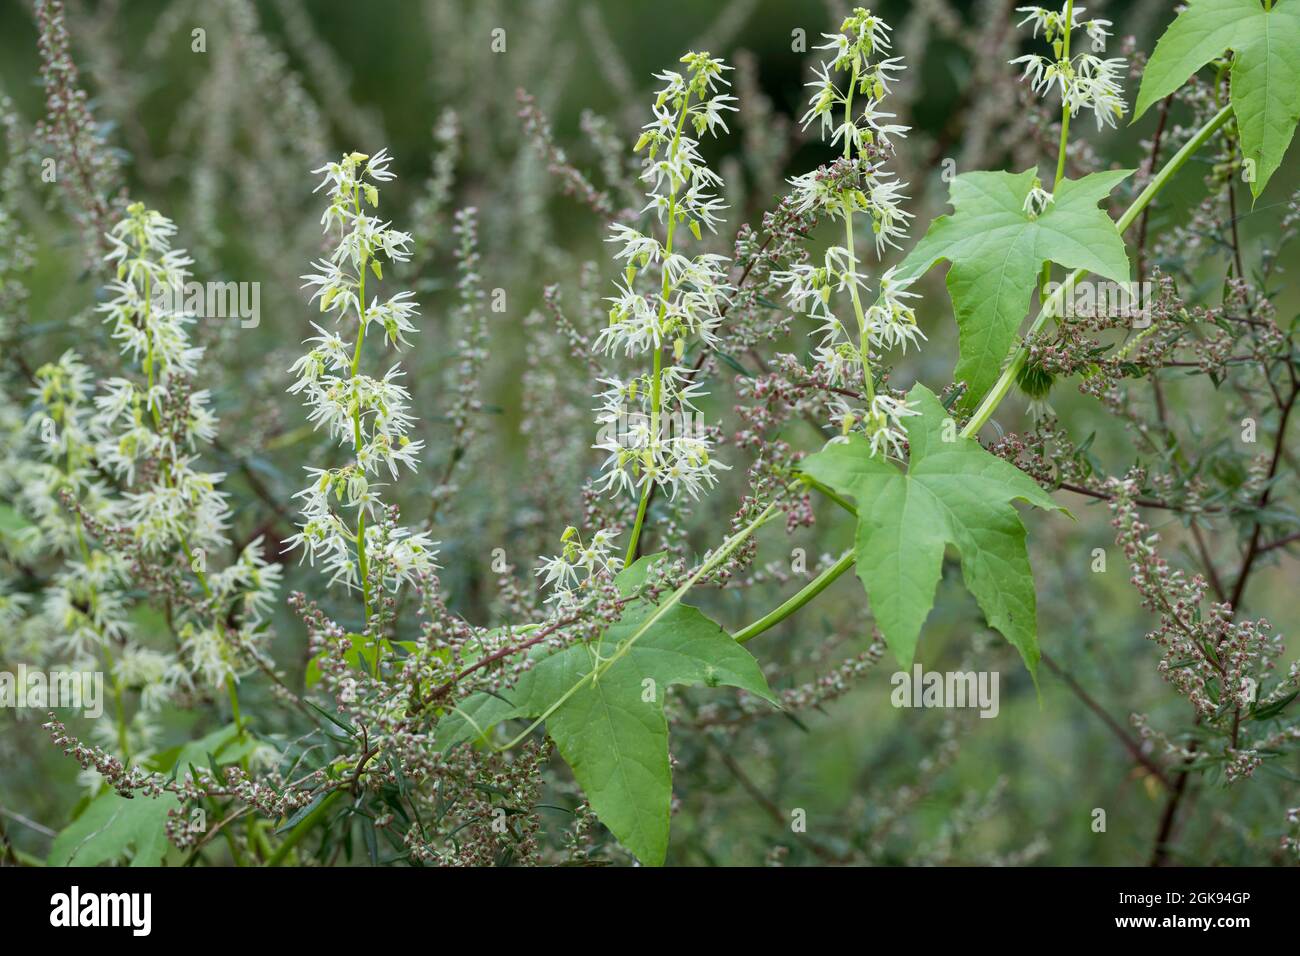 Pepino silvestre, manzana balsam silvestre, mosto-pepino silvestre (Echinocystis lobata), floreciendo, Alemania Foto de stock